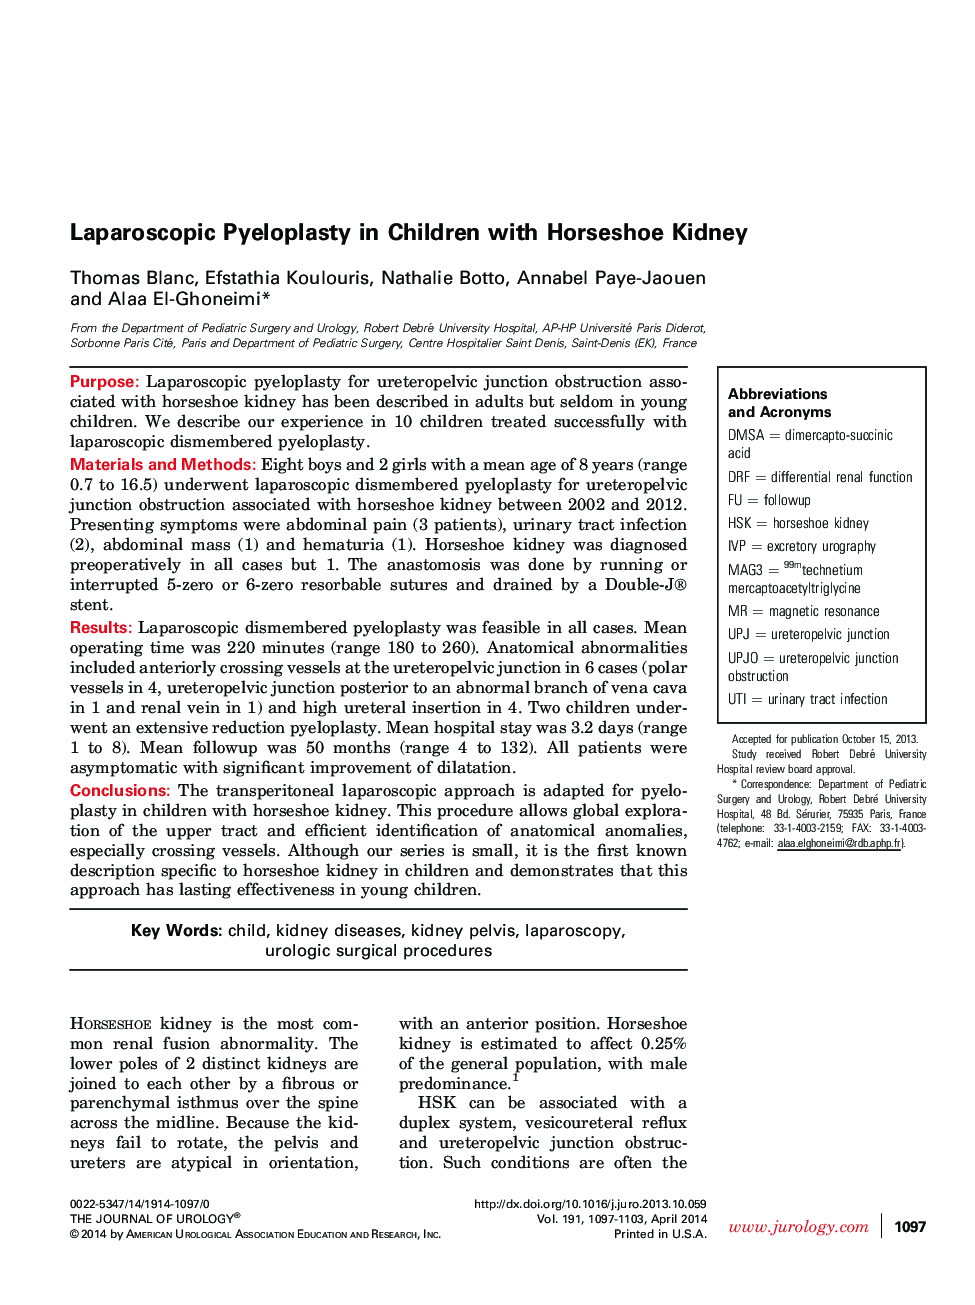 پالوپلاستی لاپاراسکوپی در کودکان مبتلا به کبد چرک 